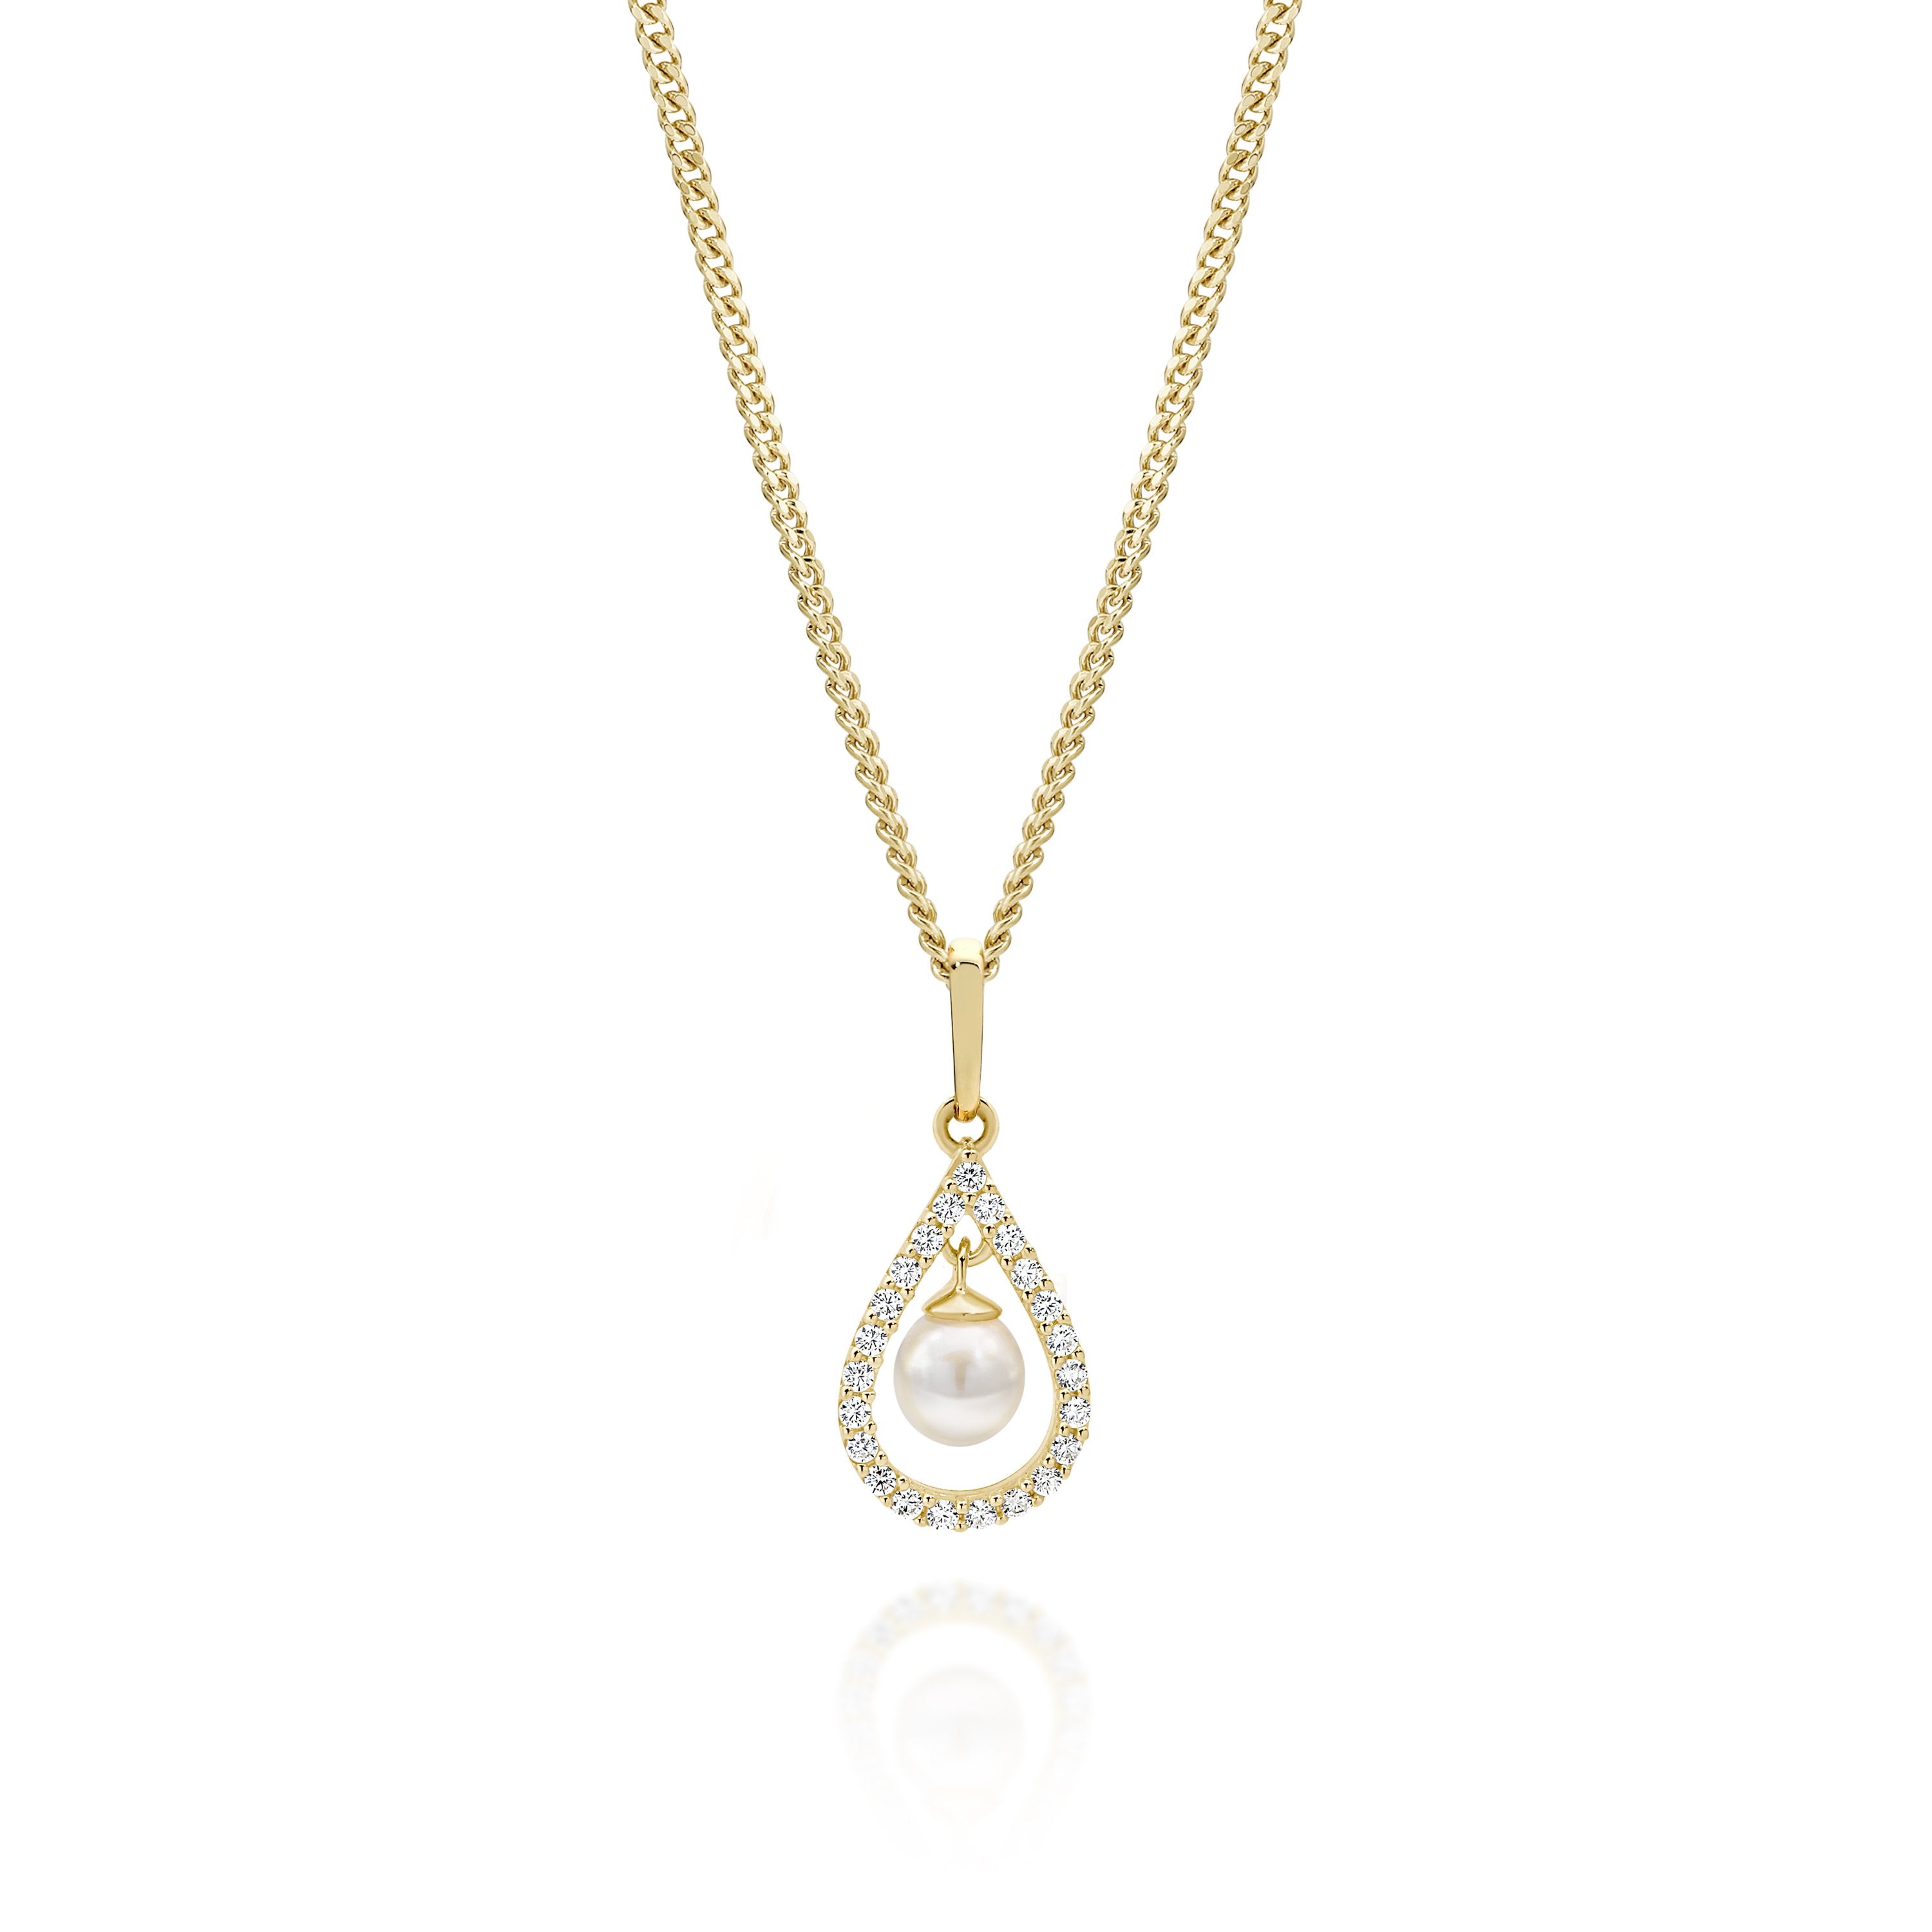 9ct gold tear drop pearl pendant